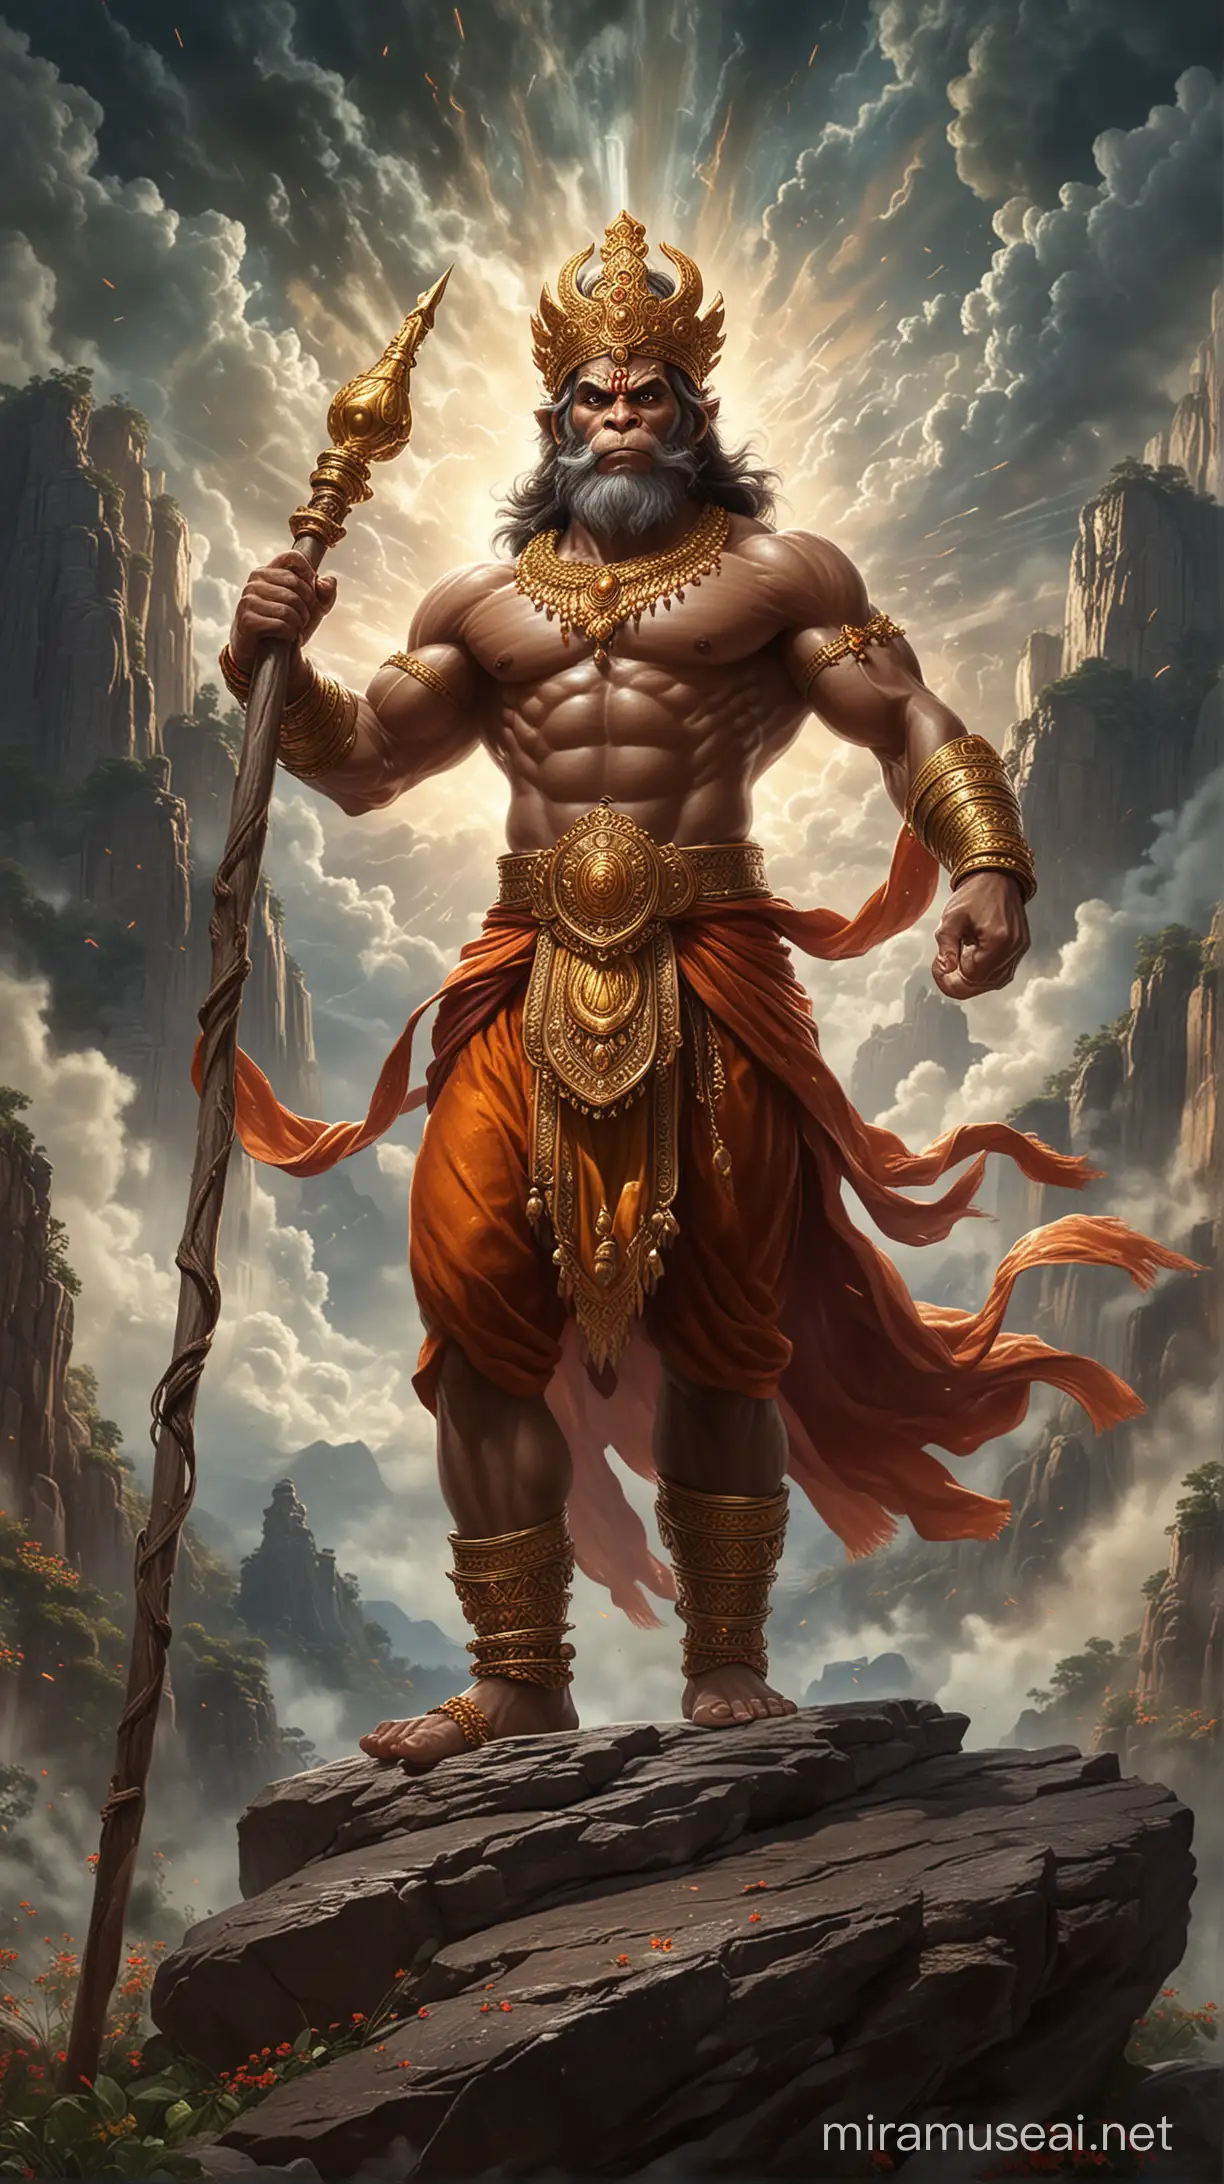 Divine Hanuman Holding Golden Mace Bomb on Battle Field